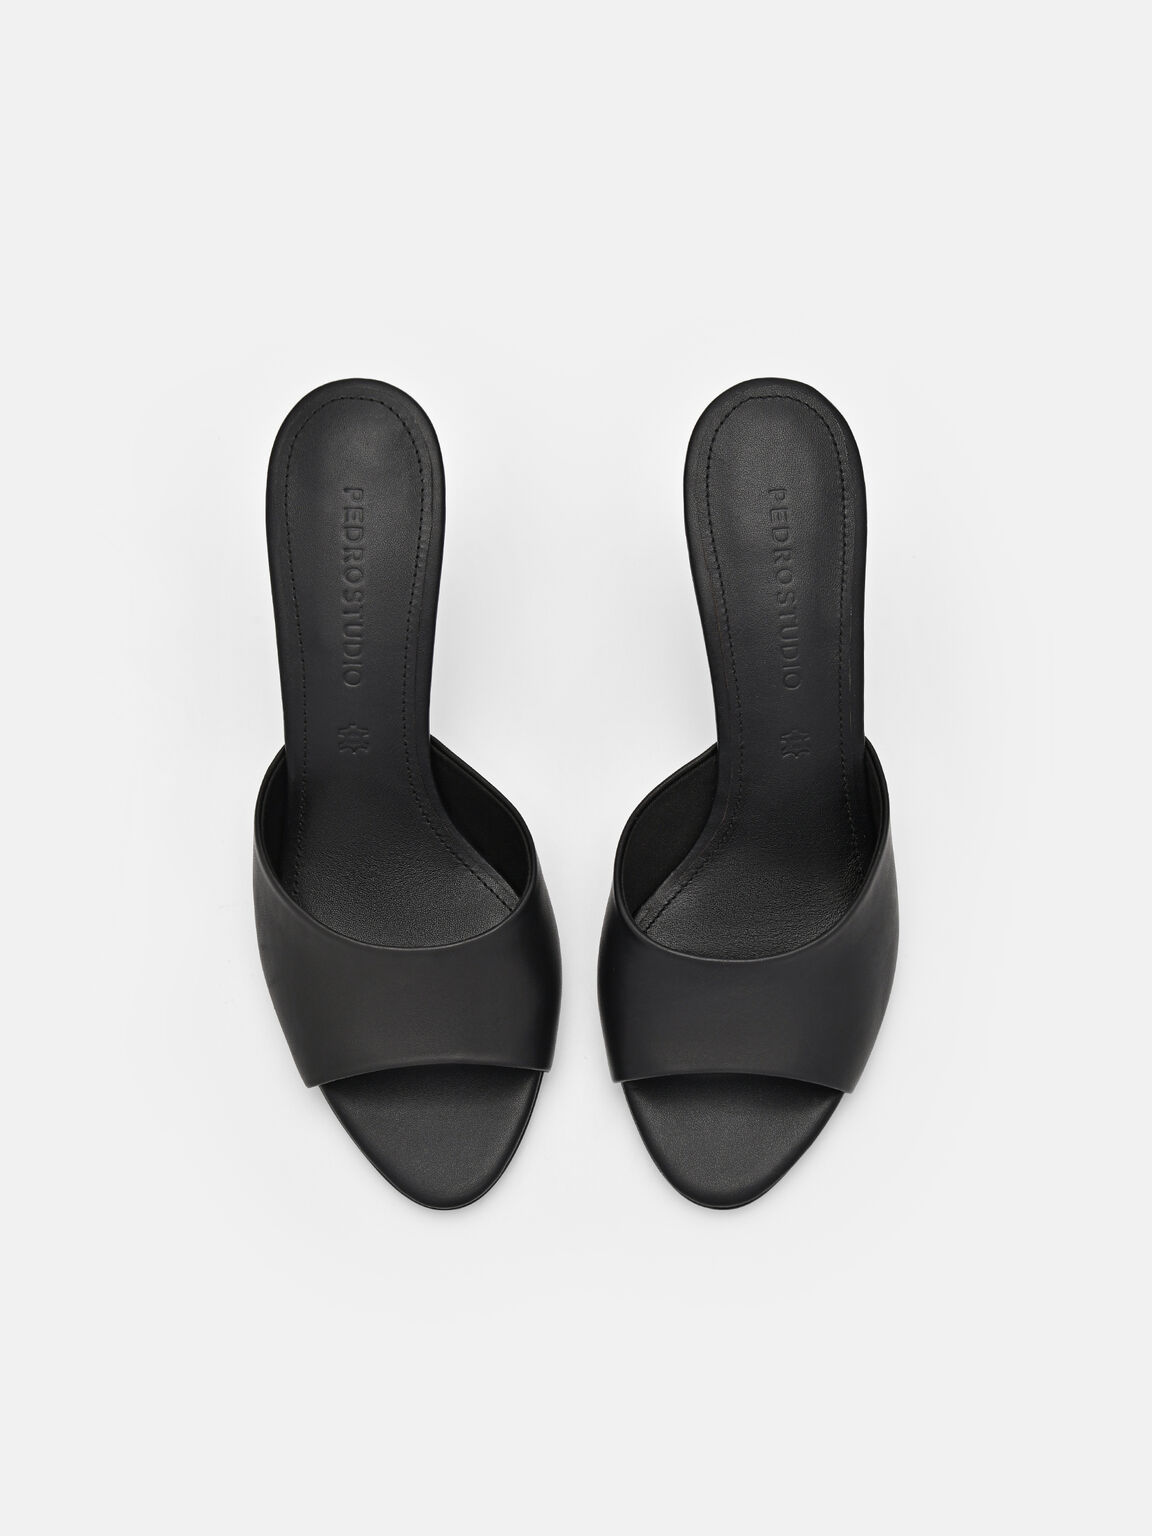 PEDRO Studio Ashley Leather Heel Sandals, Black, hi-res